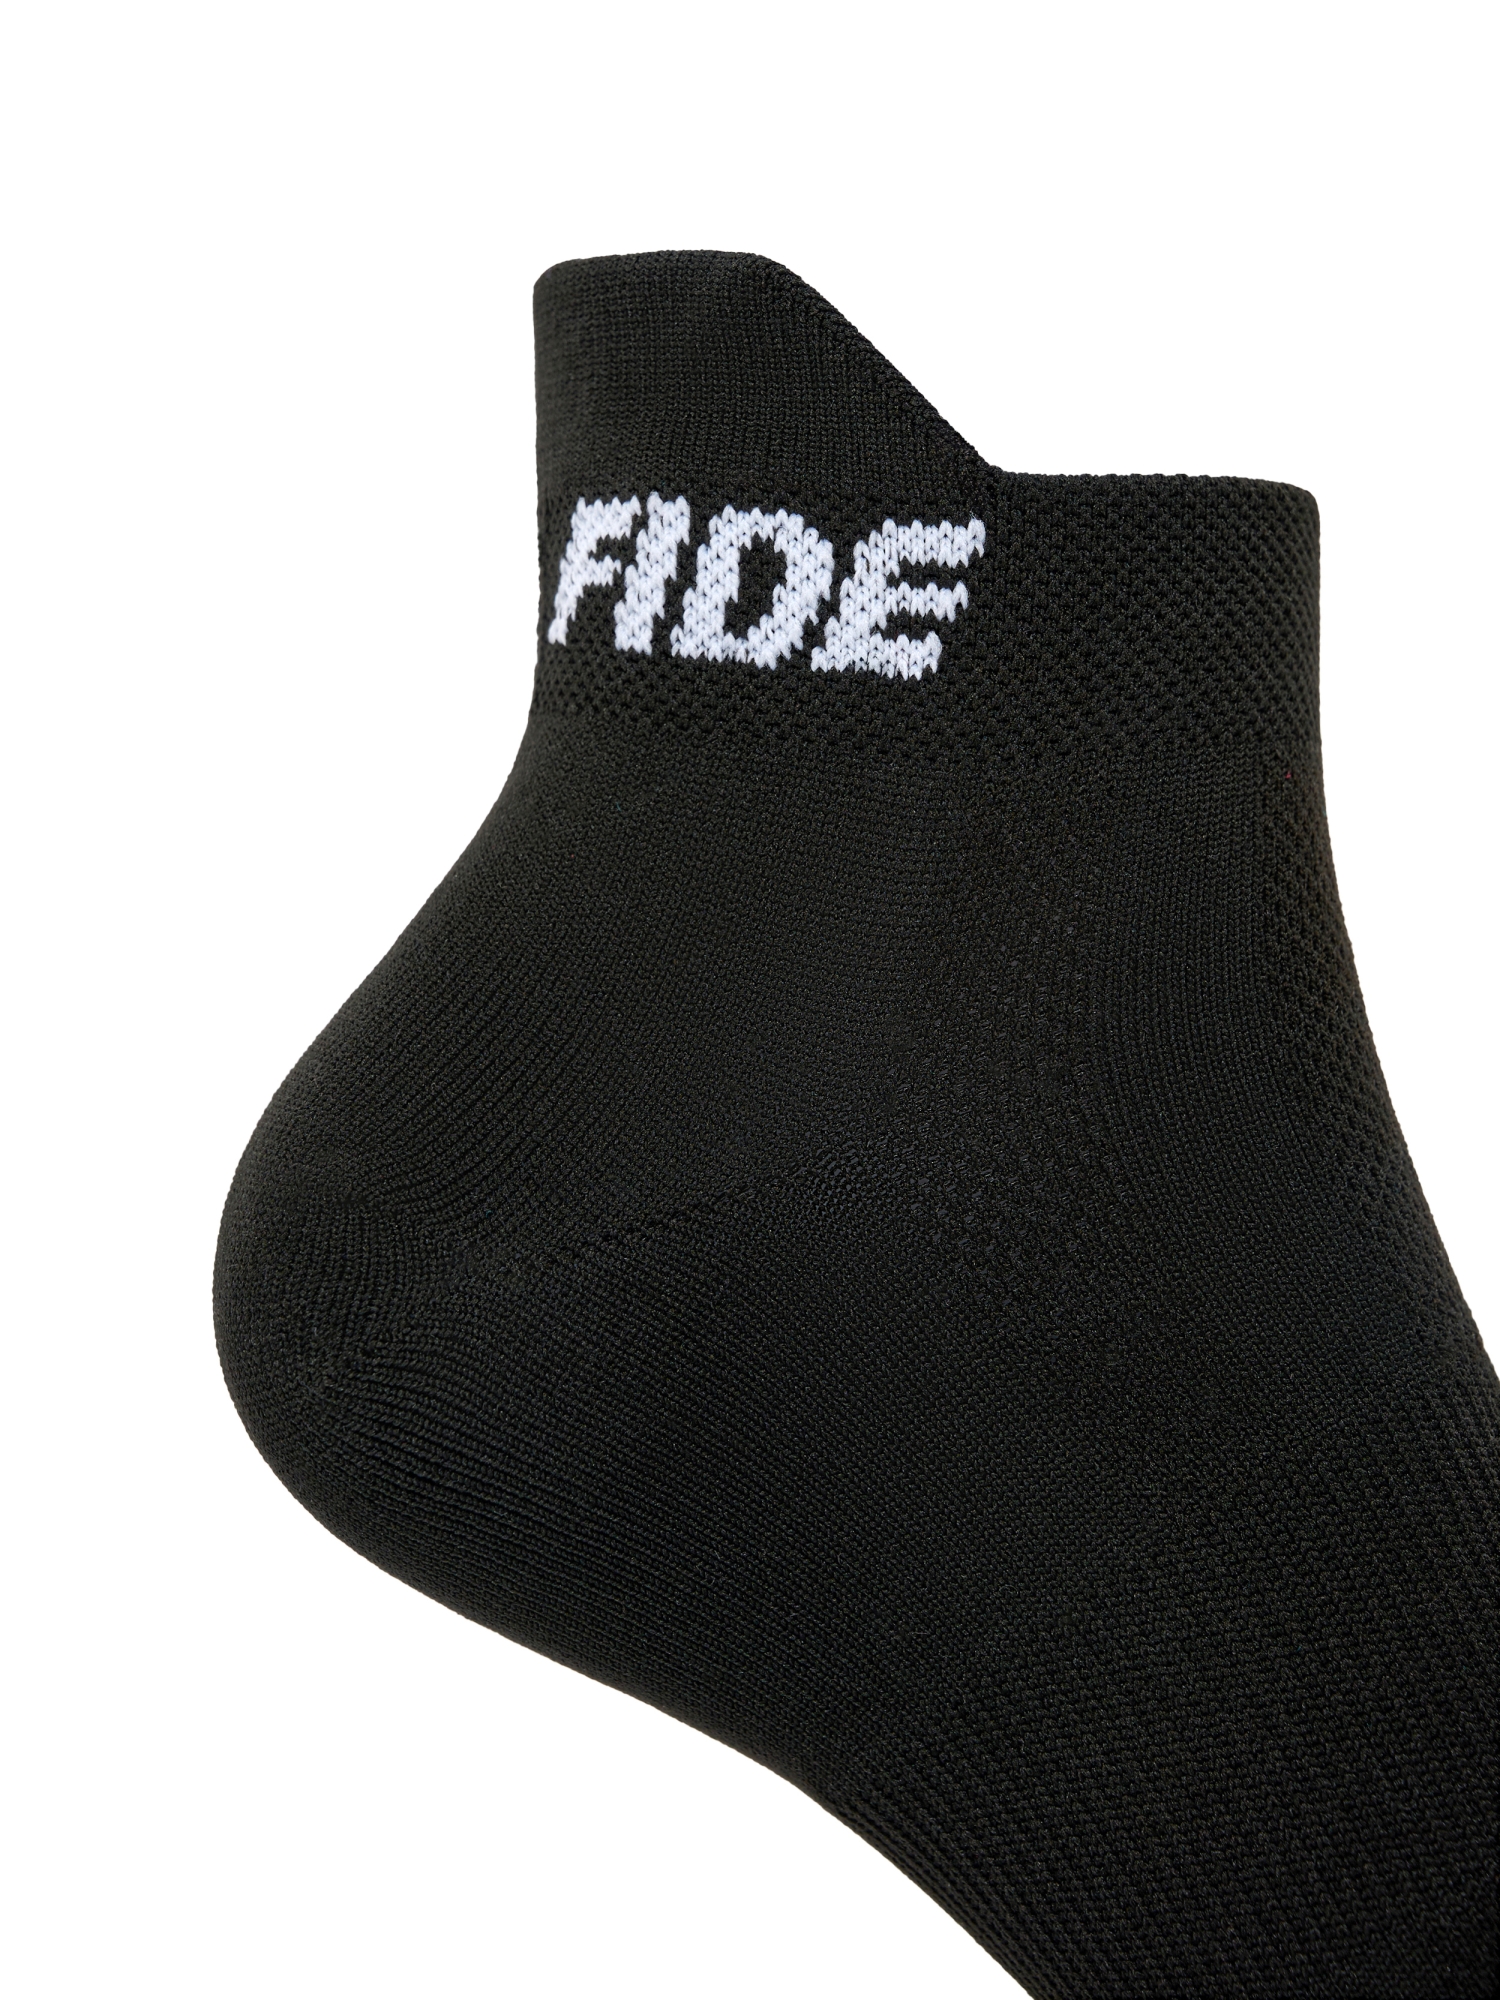 Bona Fide: Socks "Black"(3 пары) фото 3